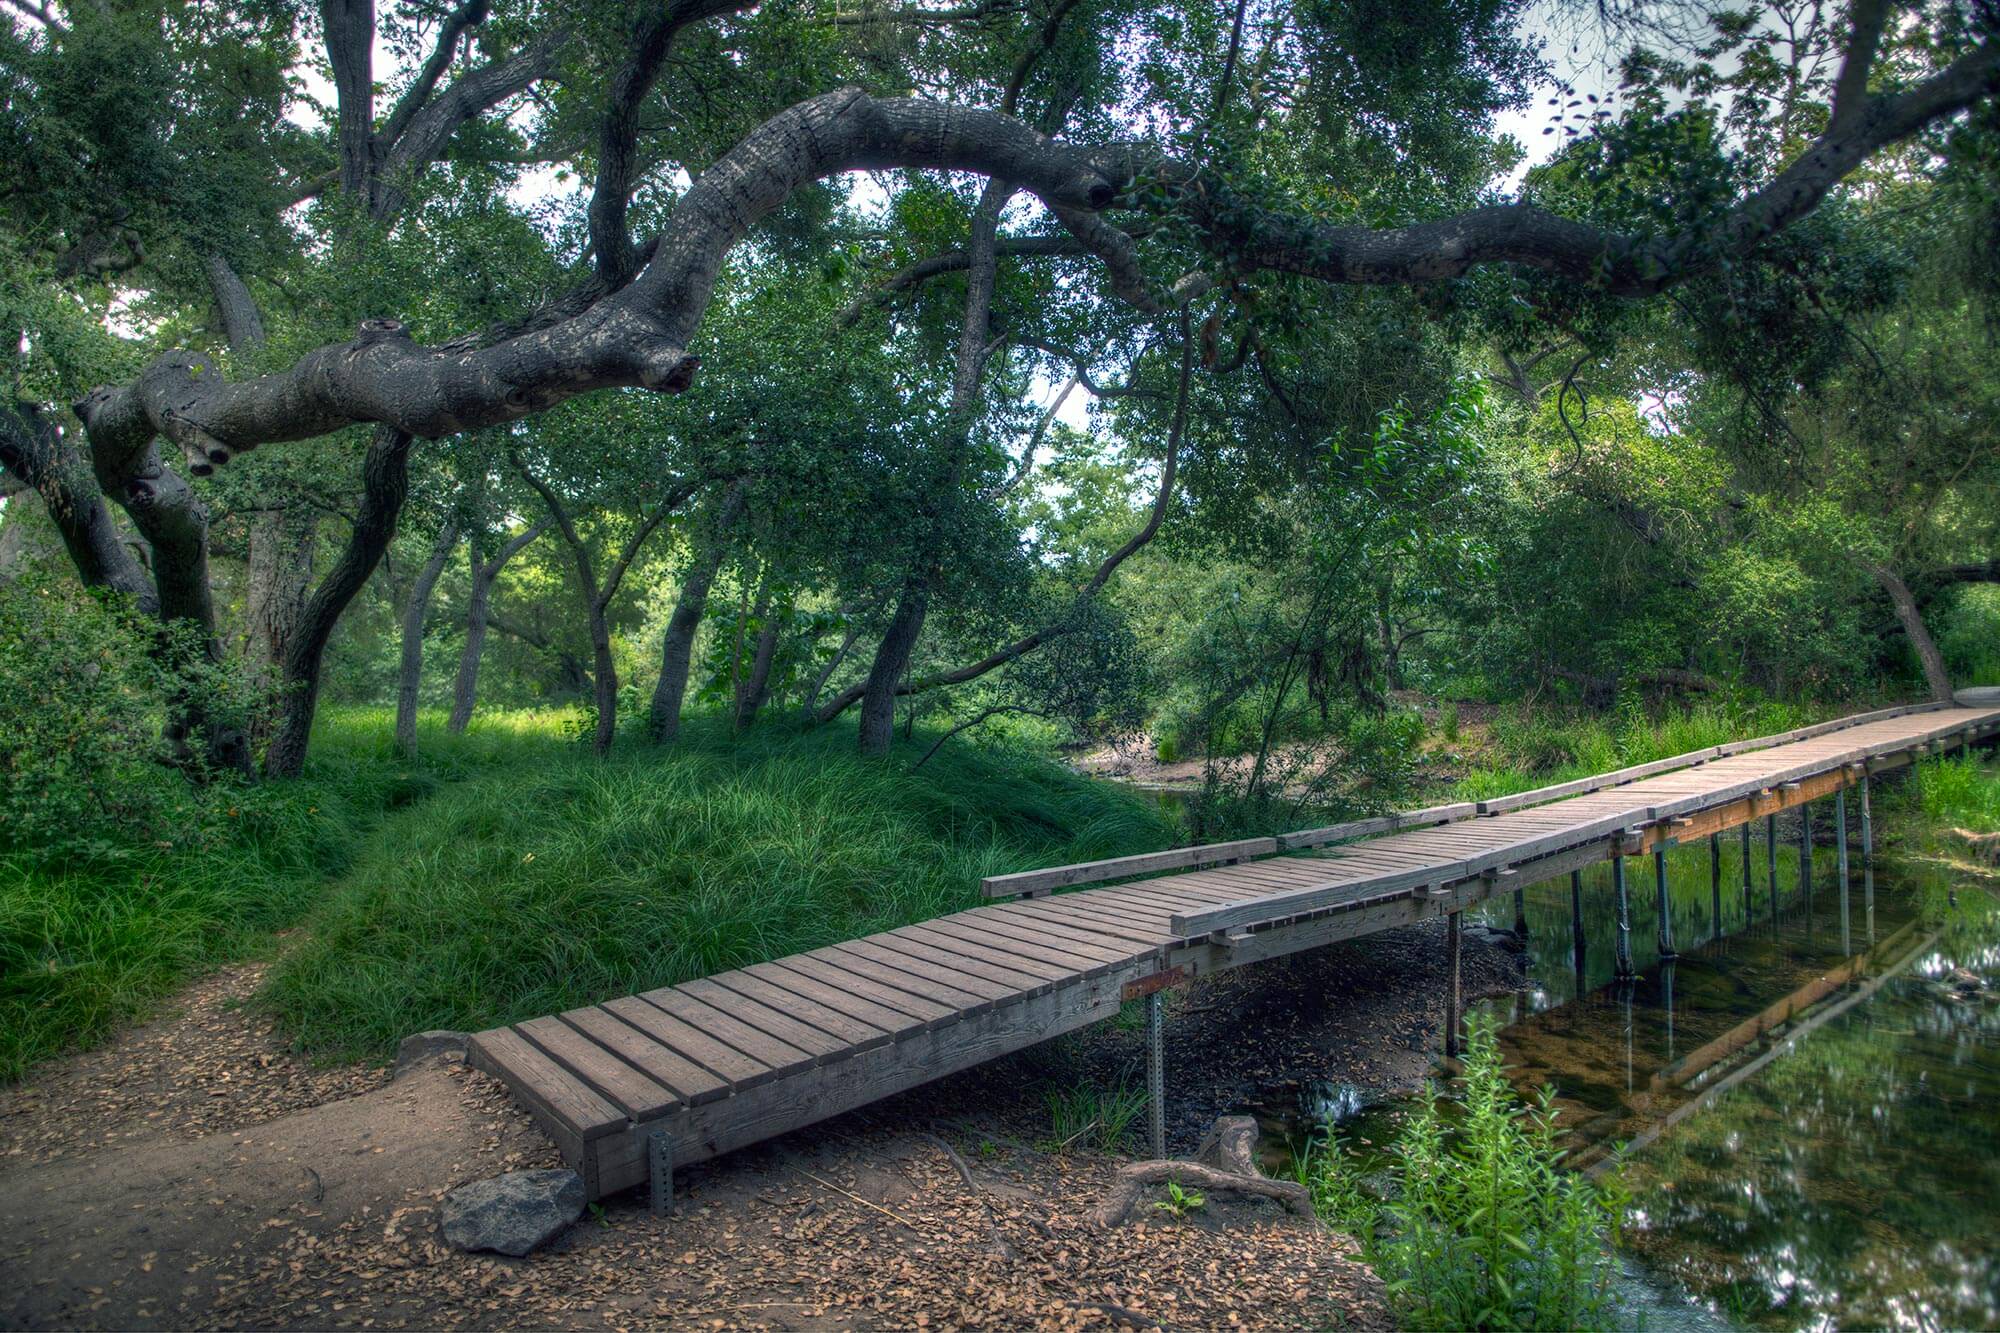 Carson's Crossing bridge and surrounding trees